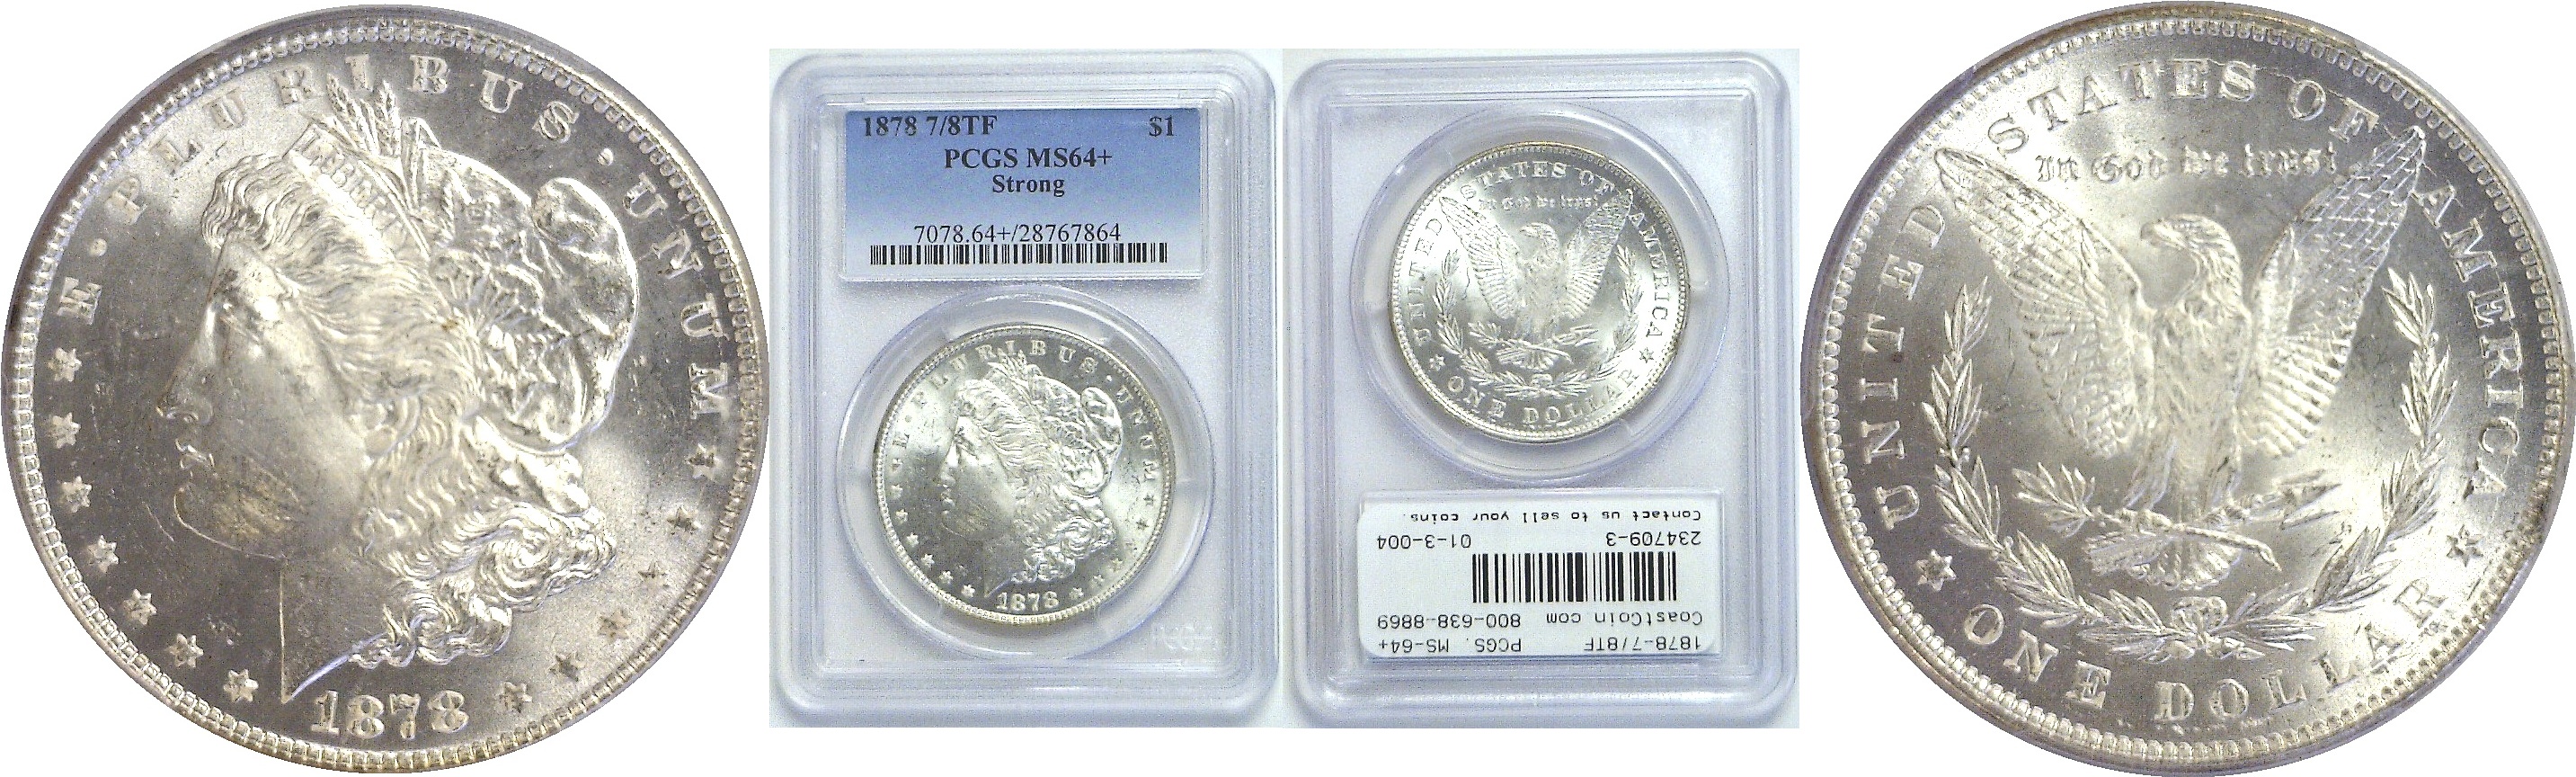 1878-7/8TF. PCGS. MS-64+. | Morgan Dollar | Coast to Coast Coins